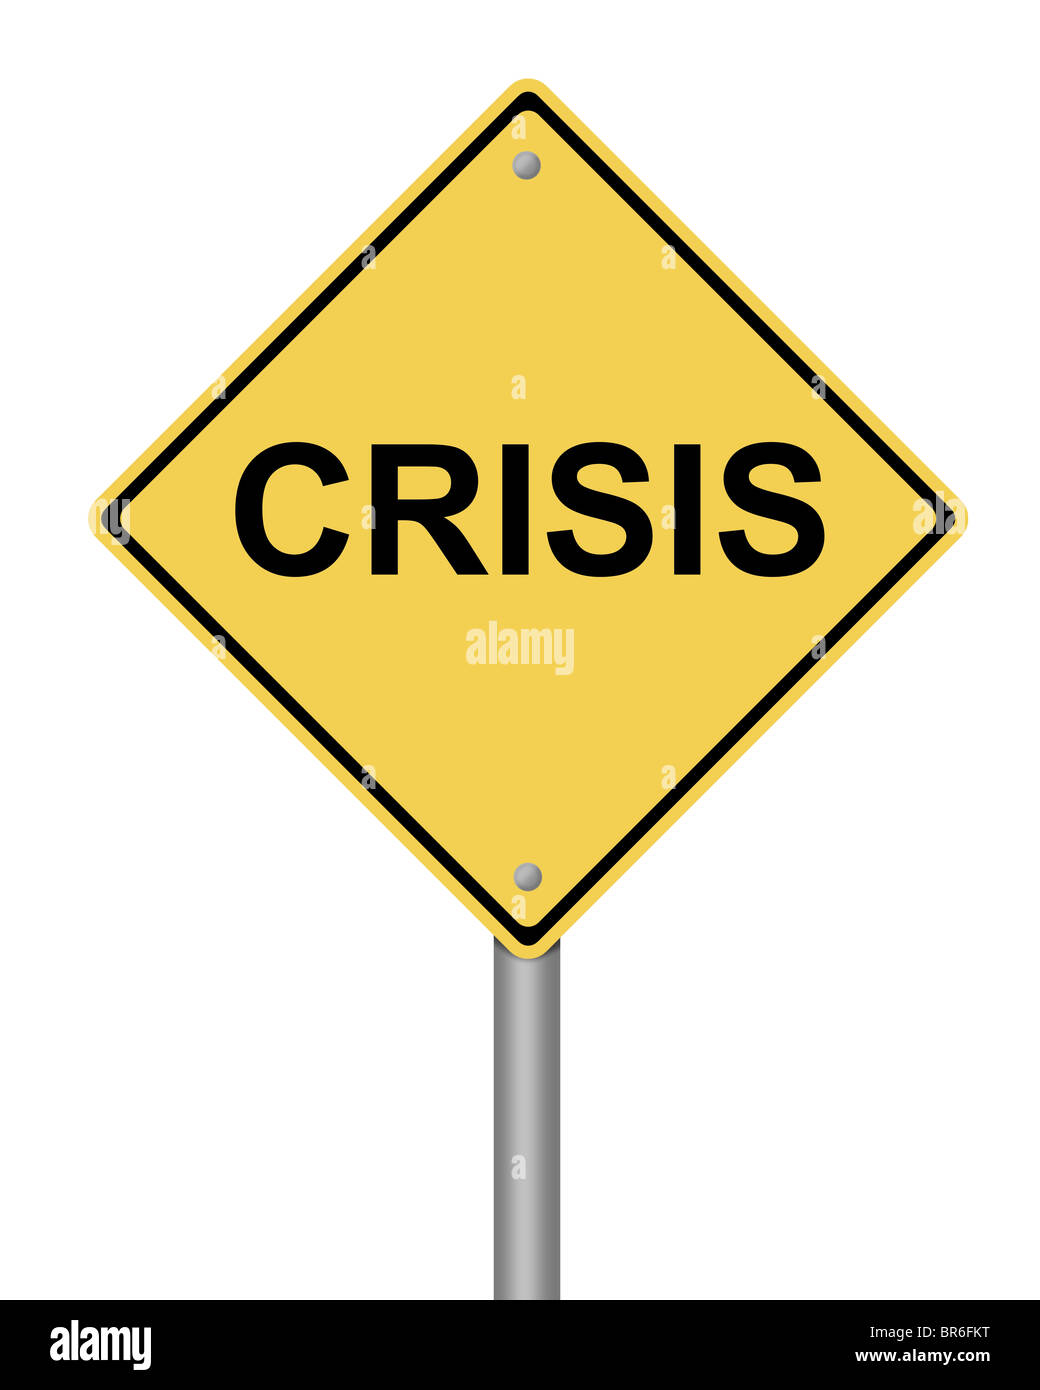 crisis yellow warning sign Stock Photo